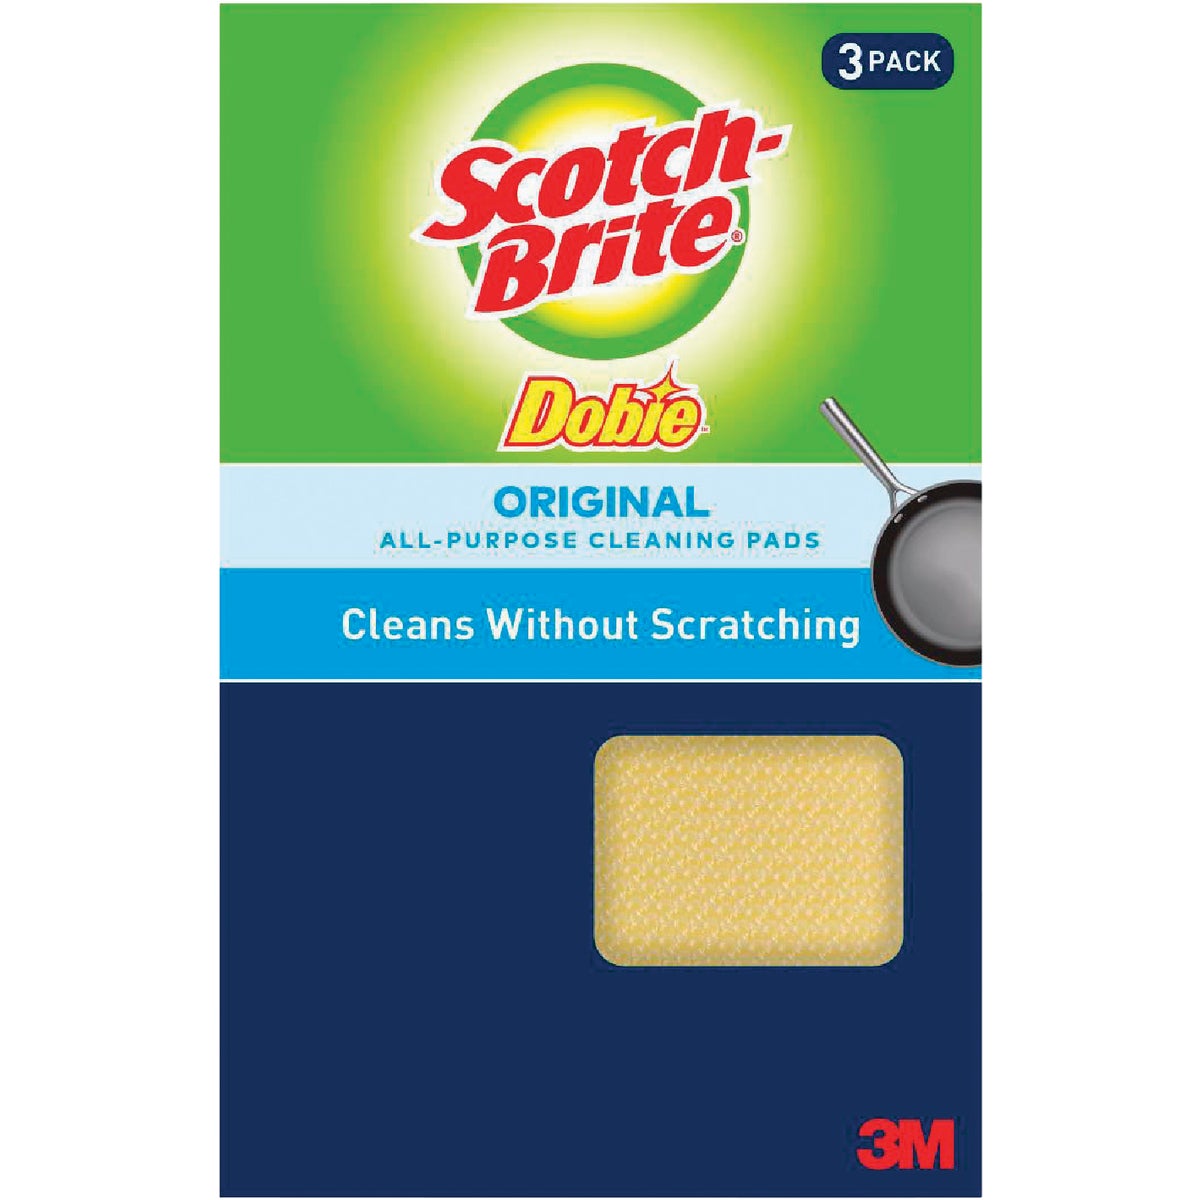 Scotch-Brite Dobie Cleaning Scouring Pad (3-Count)